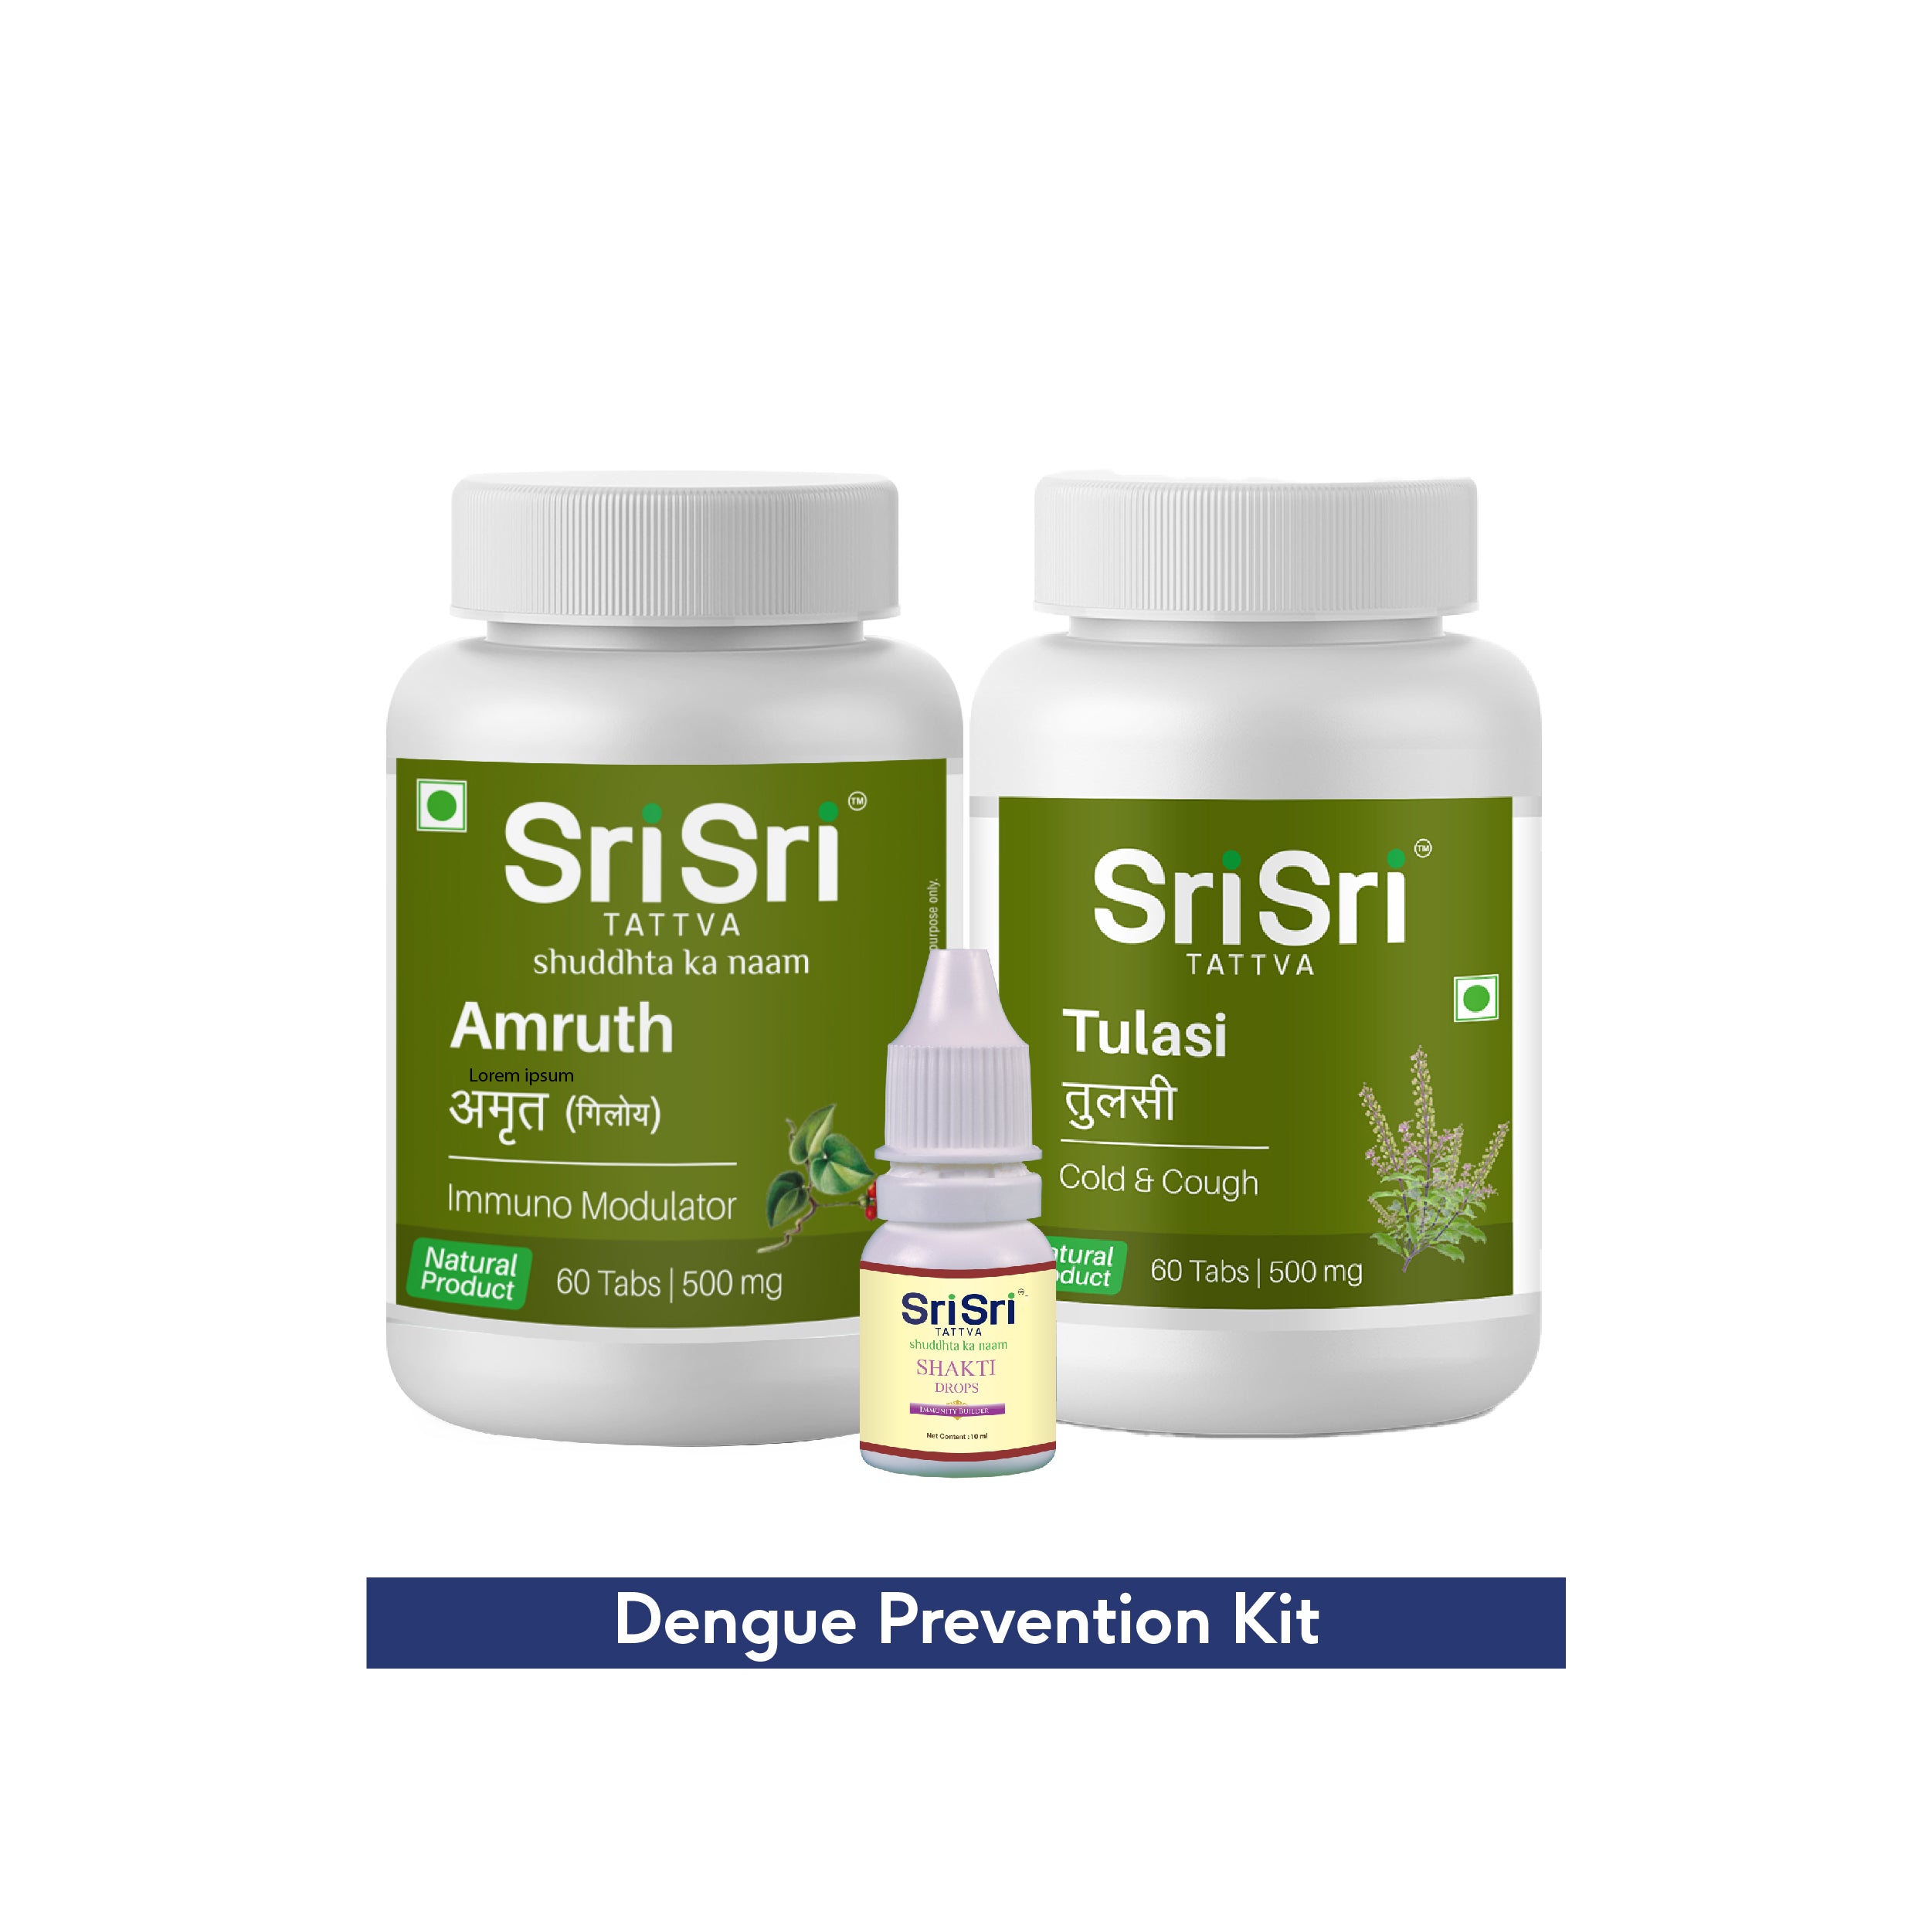 Dengue Prevention Kit (Amruth Tabs + Tulasi Tabs + Shakti Drops)